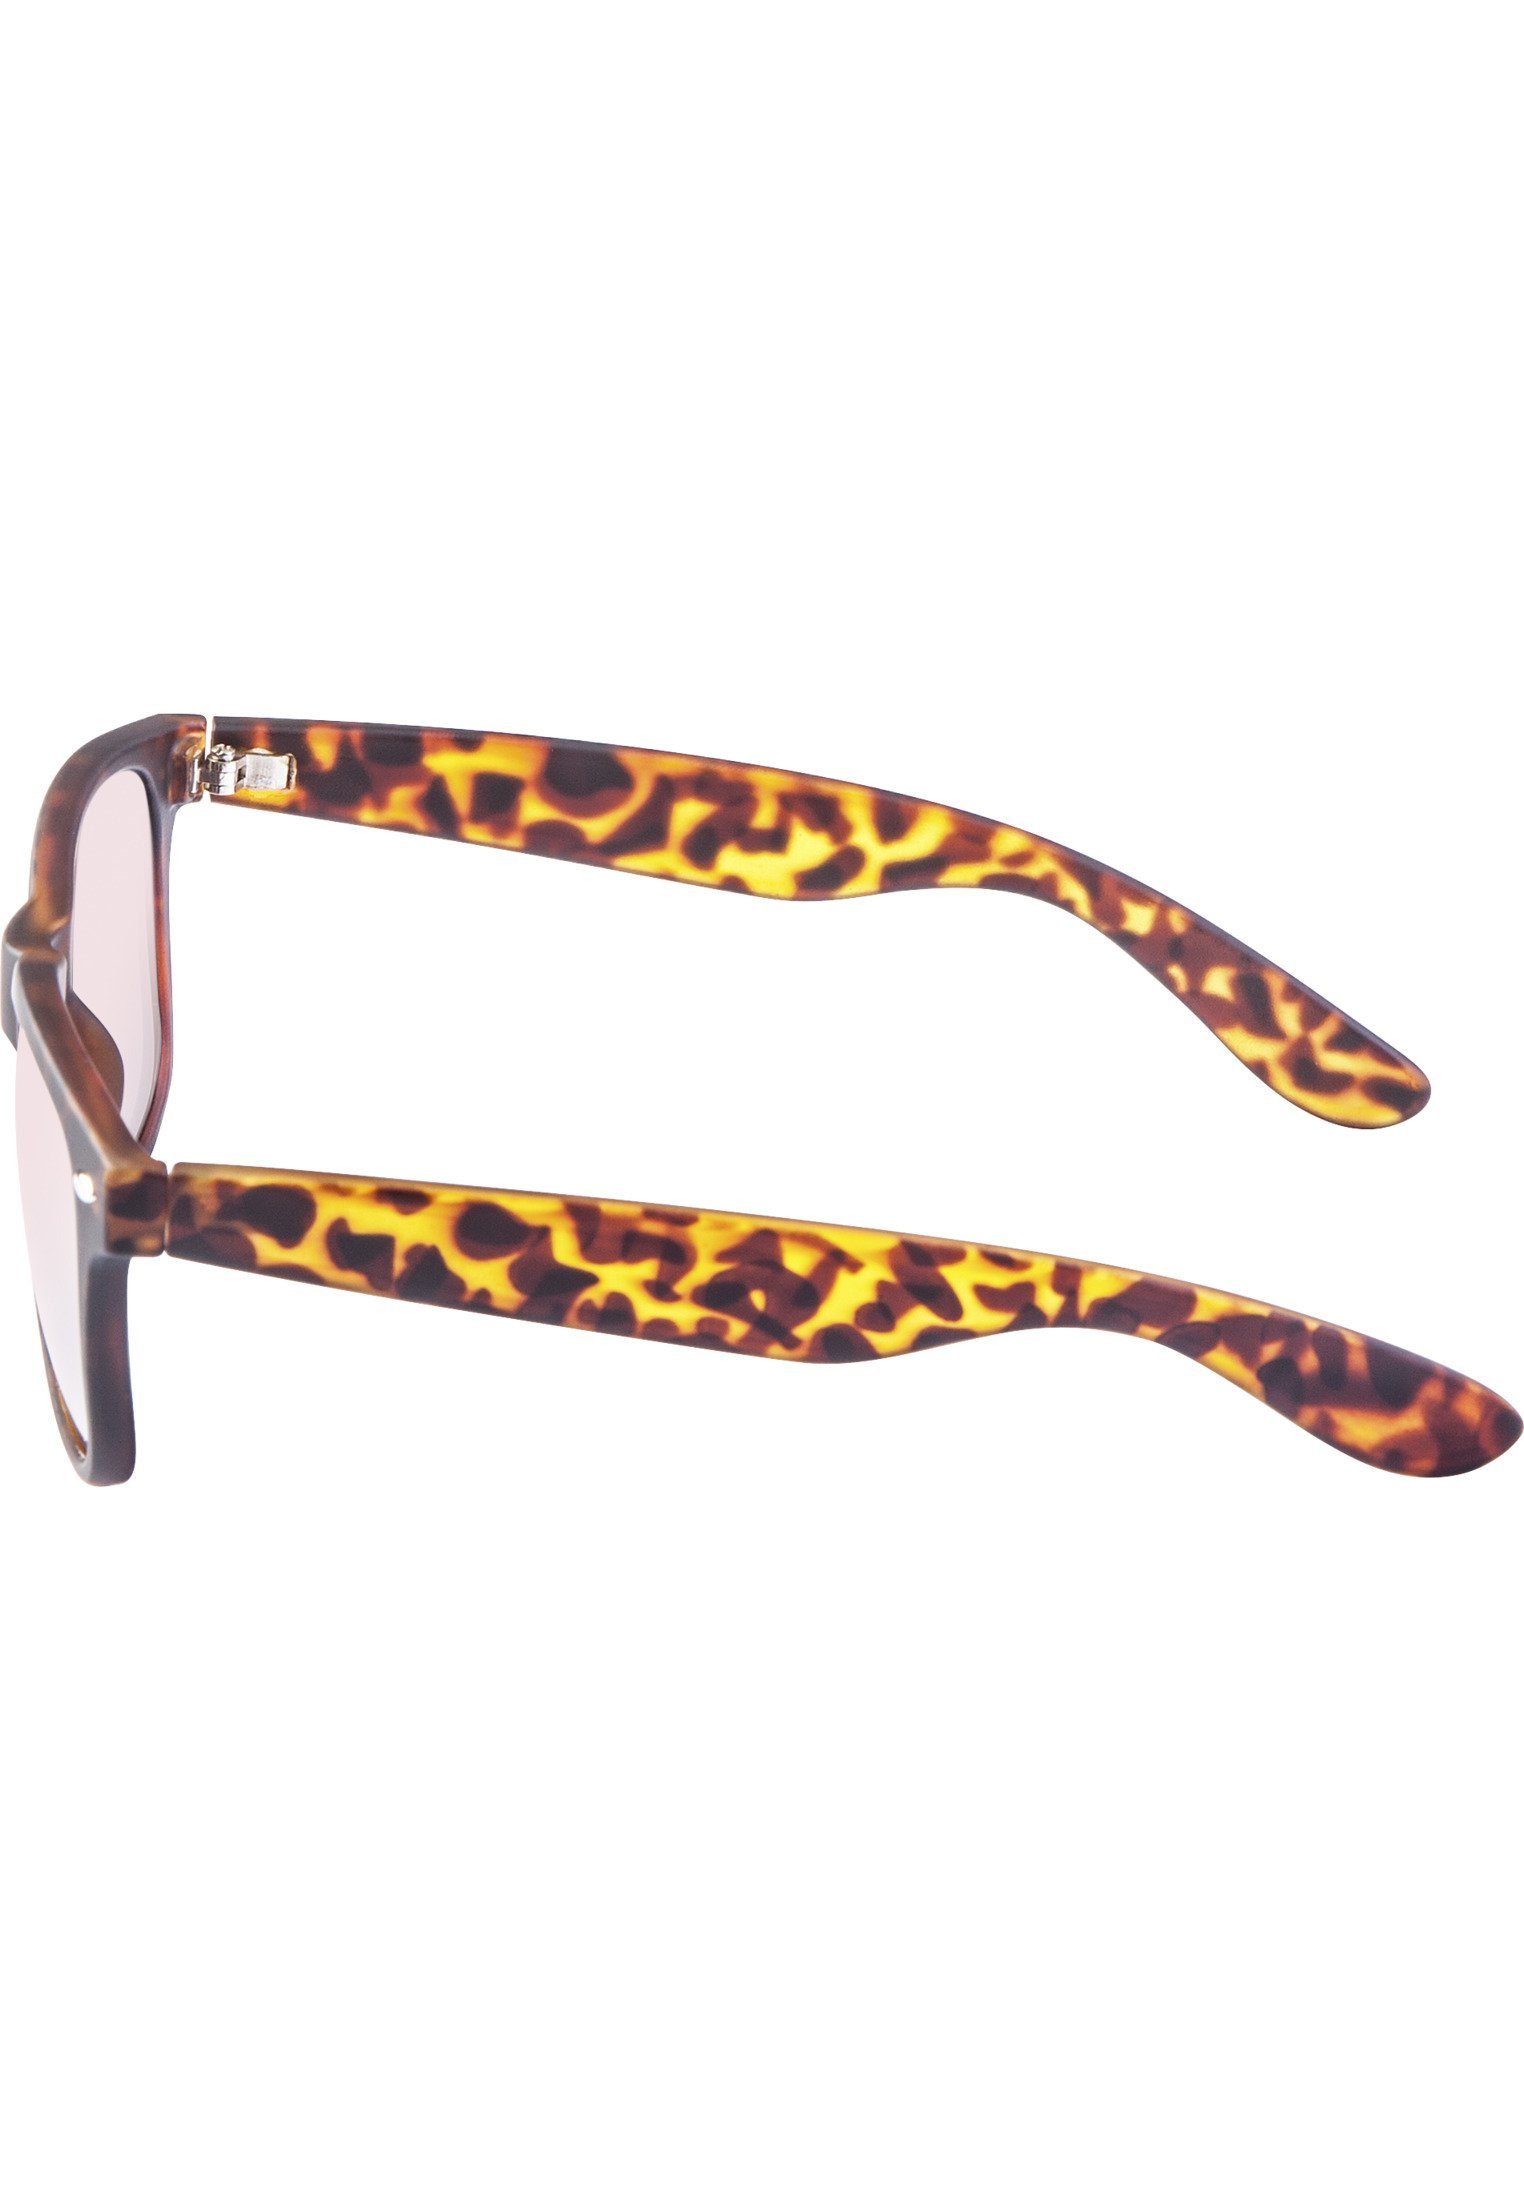 MSTRDS Sonnenbrille Accessoires havanna/rosé Likoma Youth Sunglasses